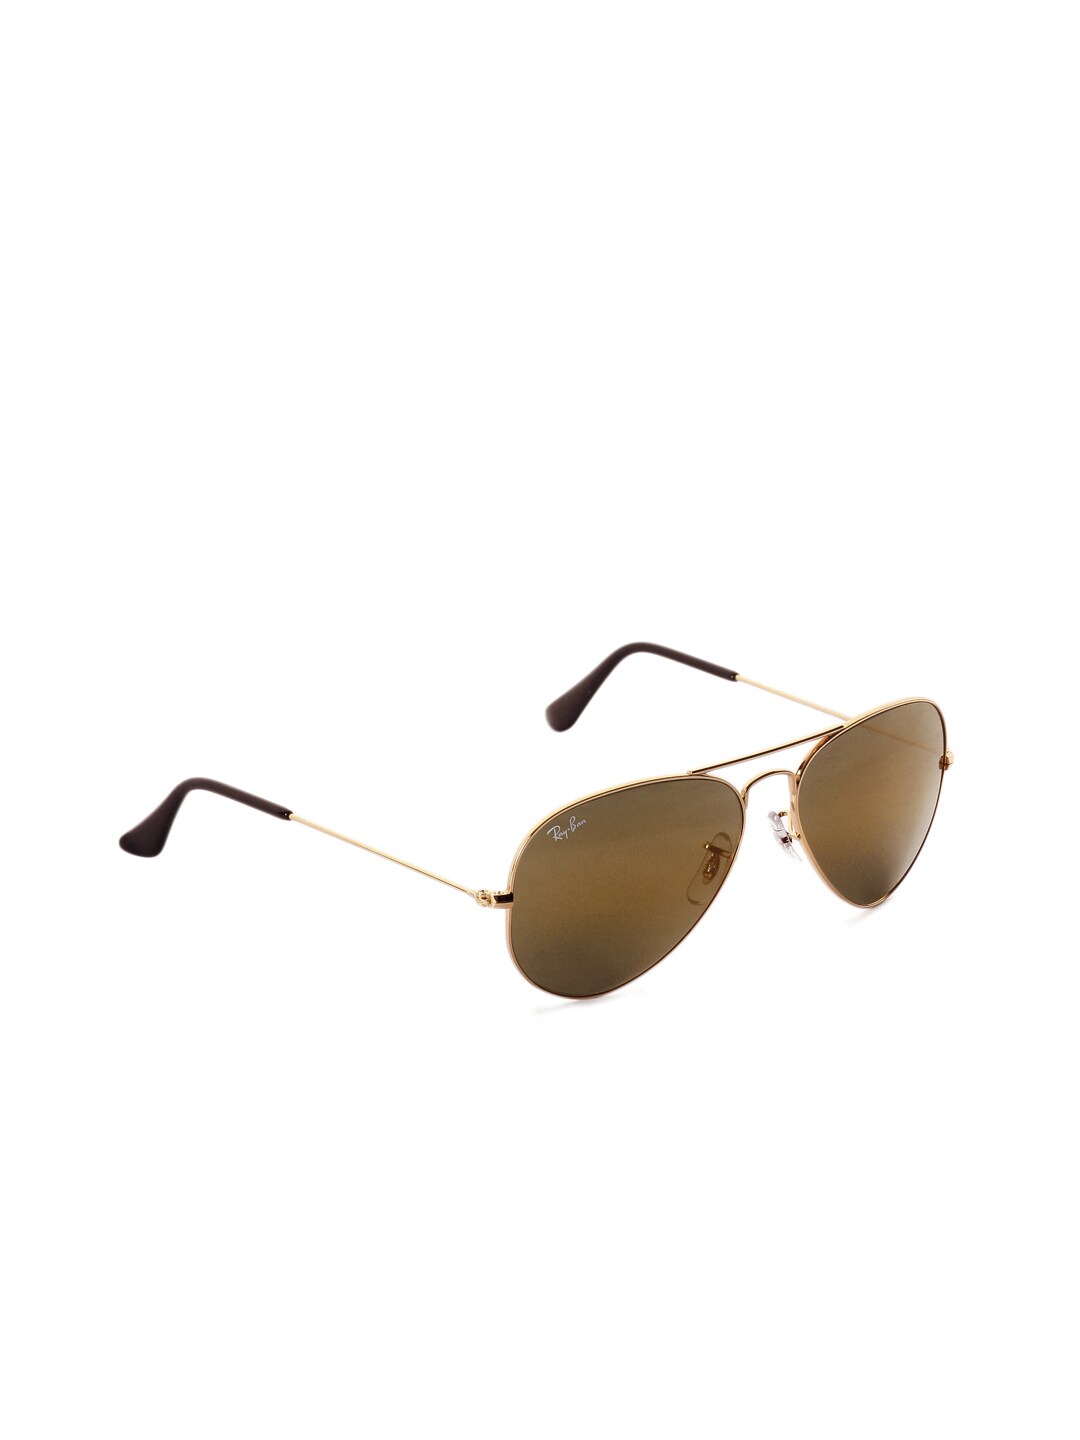 Ray-Ban Unisex Aviator Gold Sunglasses